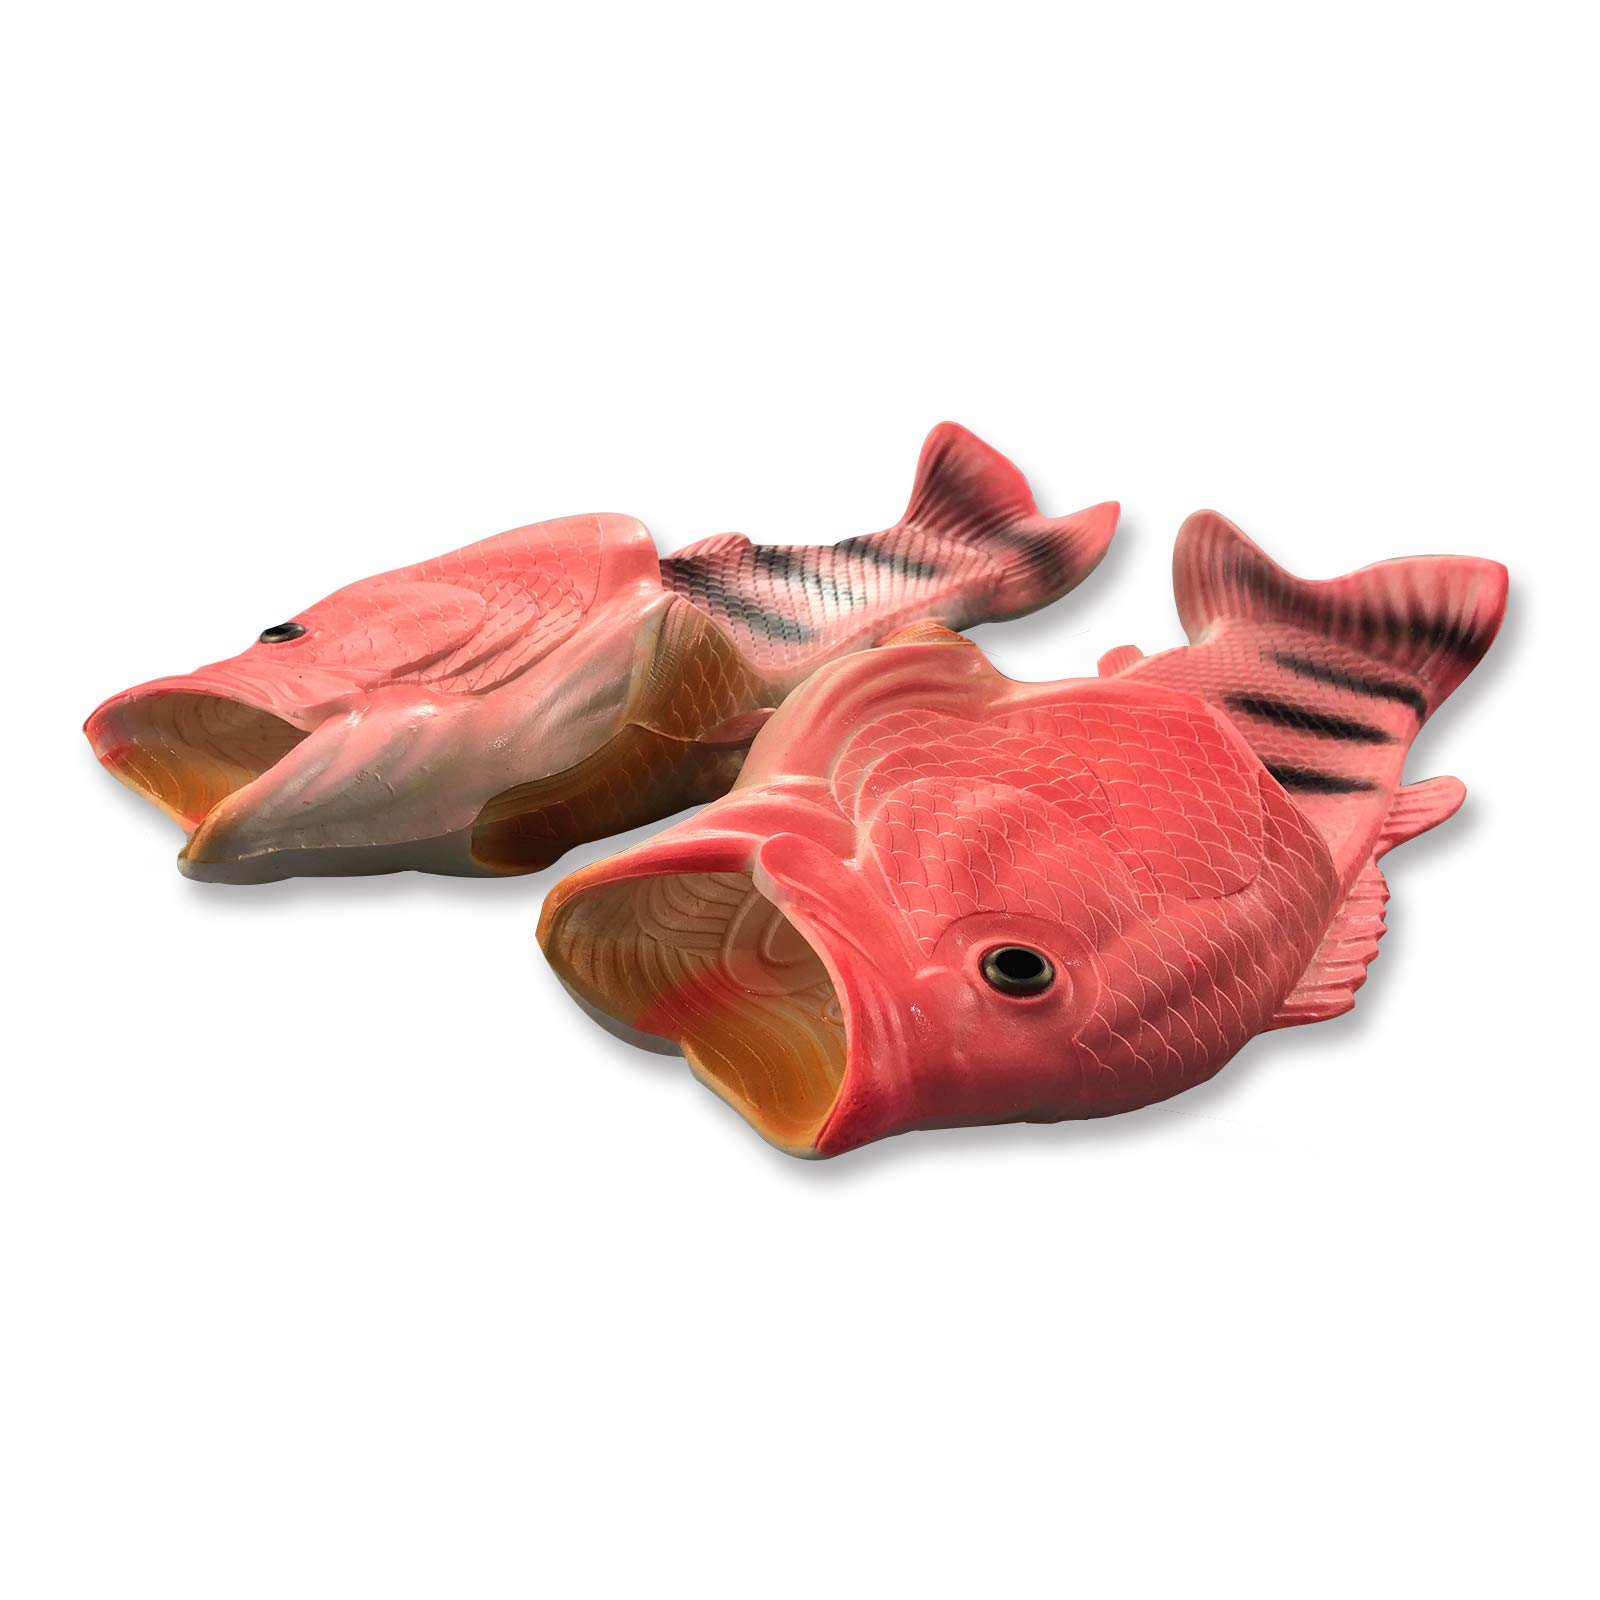 Uniqstore Sandalen Tricky Fisch Lustige Flops Hausschuhe Fisch Hausschuhe Kreative Fisch Stil Strandschuhe Simulation Fisch Strand Hausschuhe für Herren Damen Kinder Ausgefallene Geschenke Rosa